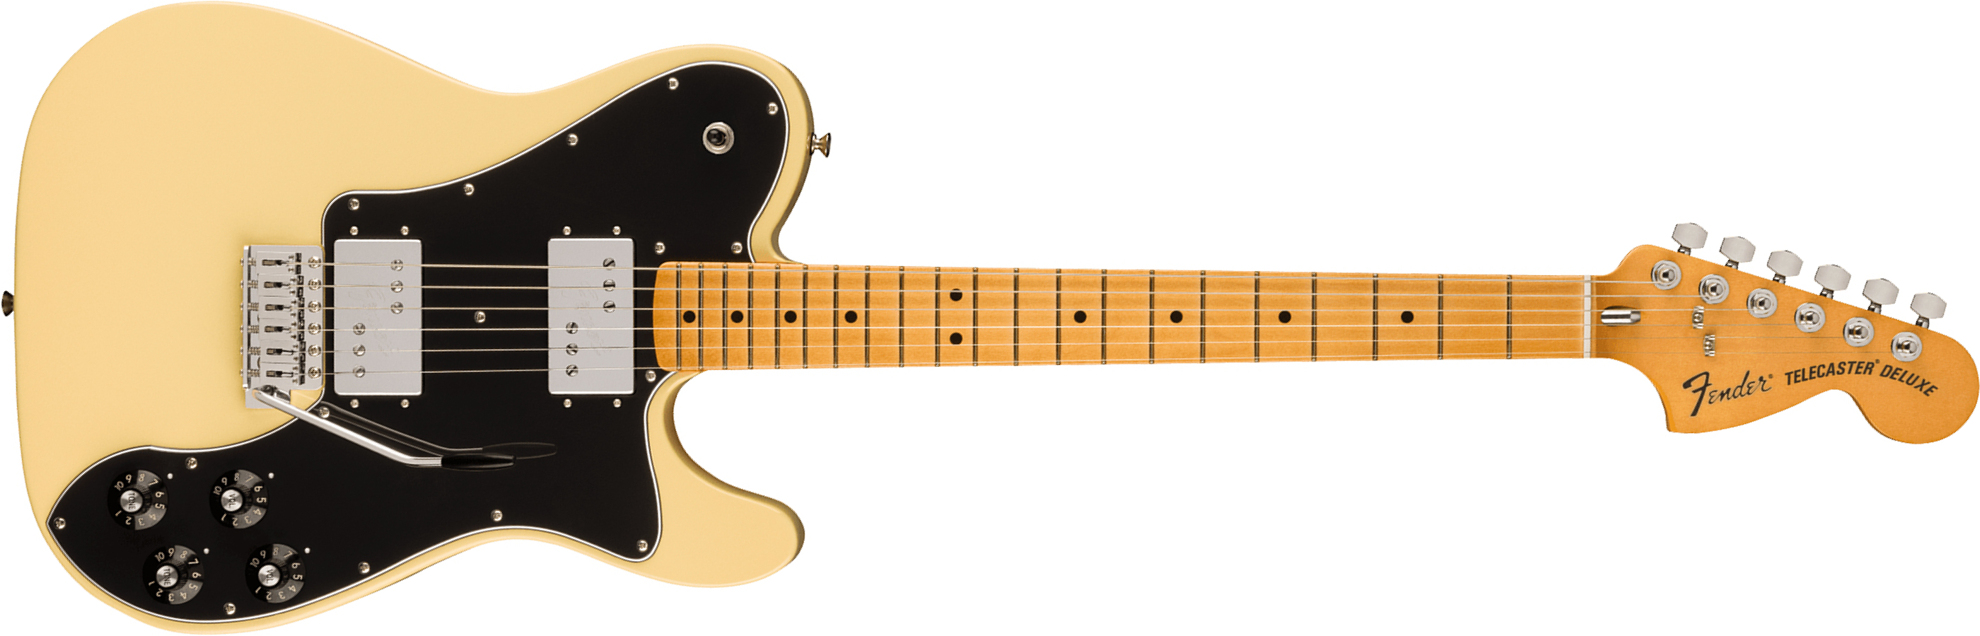 Fender Tele 70s Deluxe Tremolo Vintera 2 Mex 2h Trem Mn - Vintage White - Guitarra eléctrica con forma de tel - Main picture